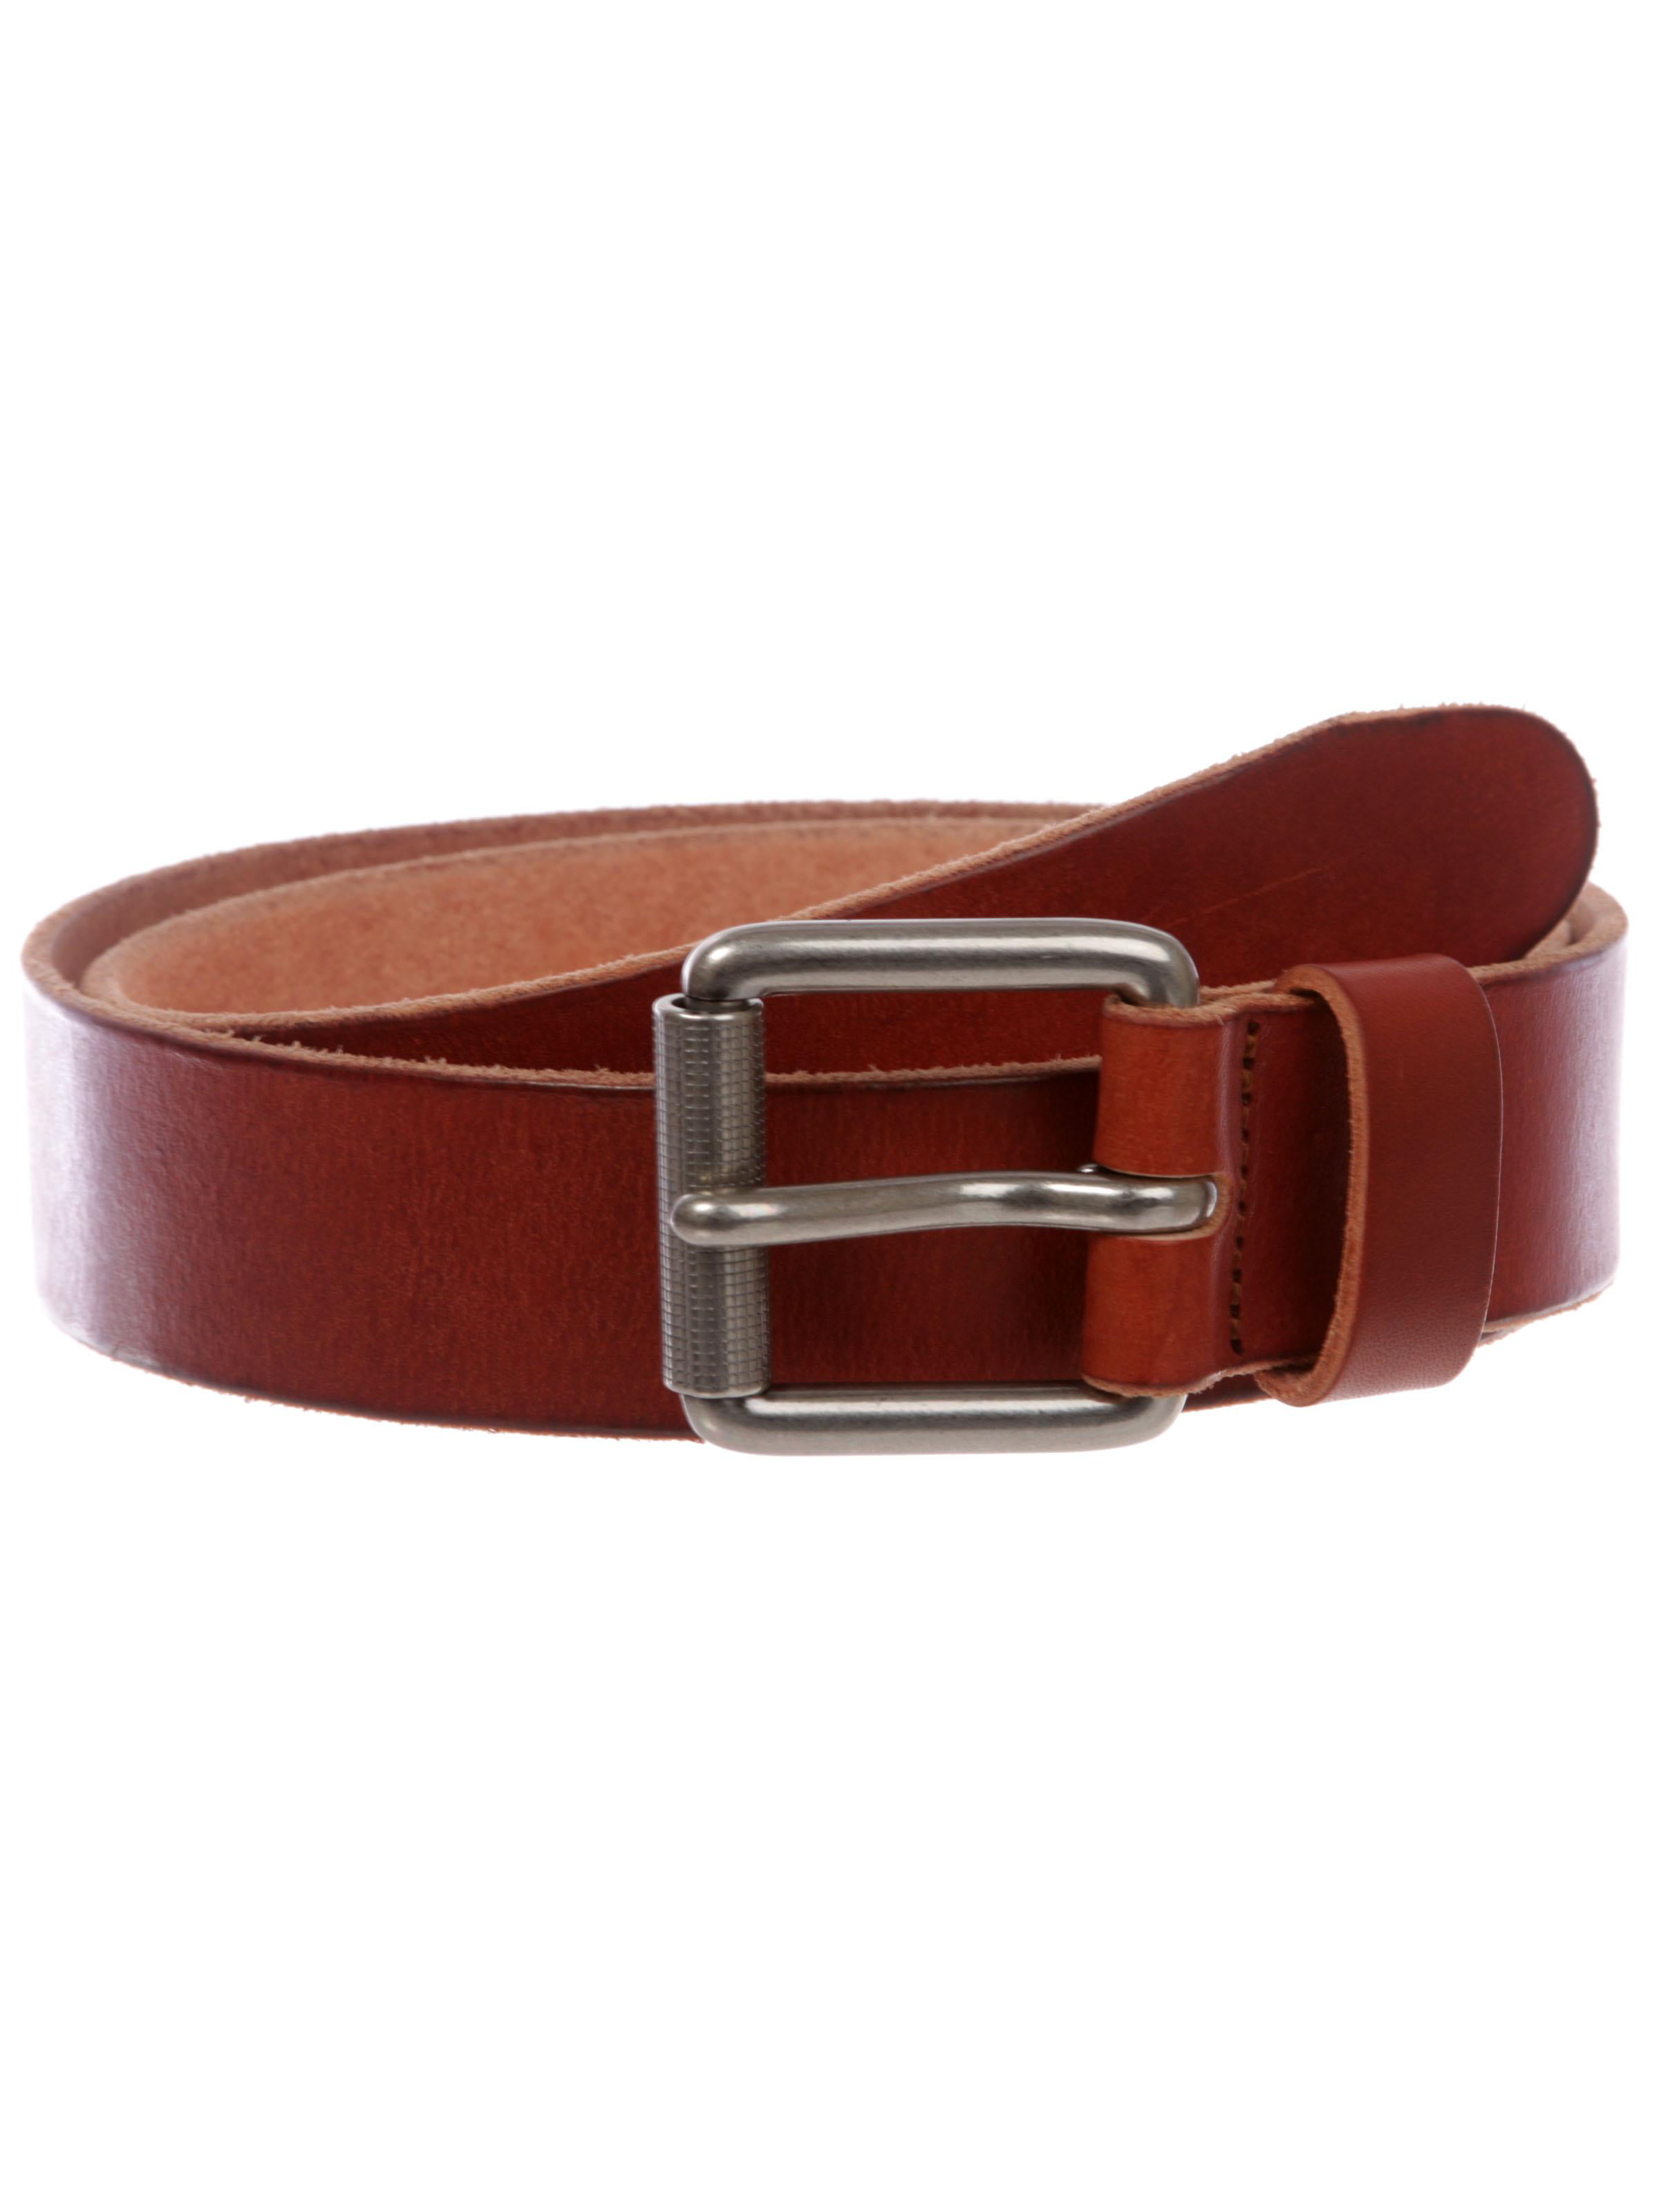 Beltiscool - Classic Italian Leather Vintage casual Belt - Walmart.com ...